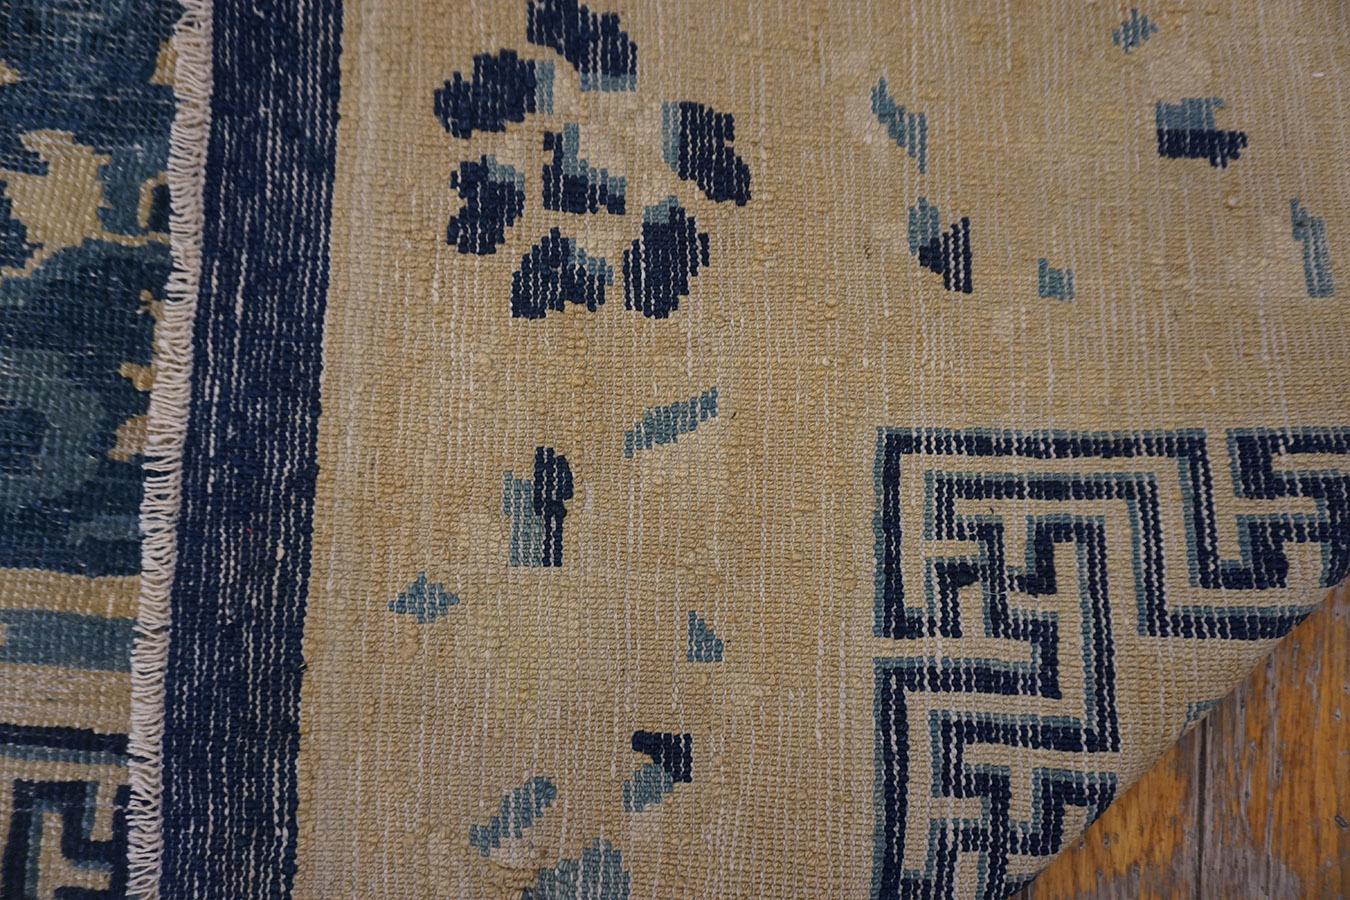 Early 20th Century Chinese Peking Carpet ( 8'10